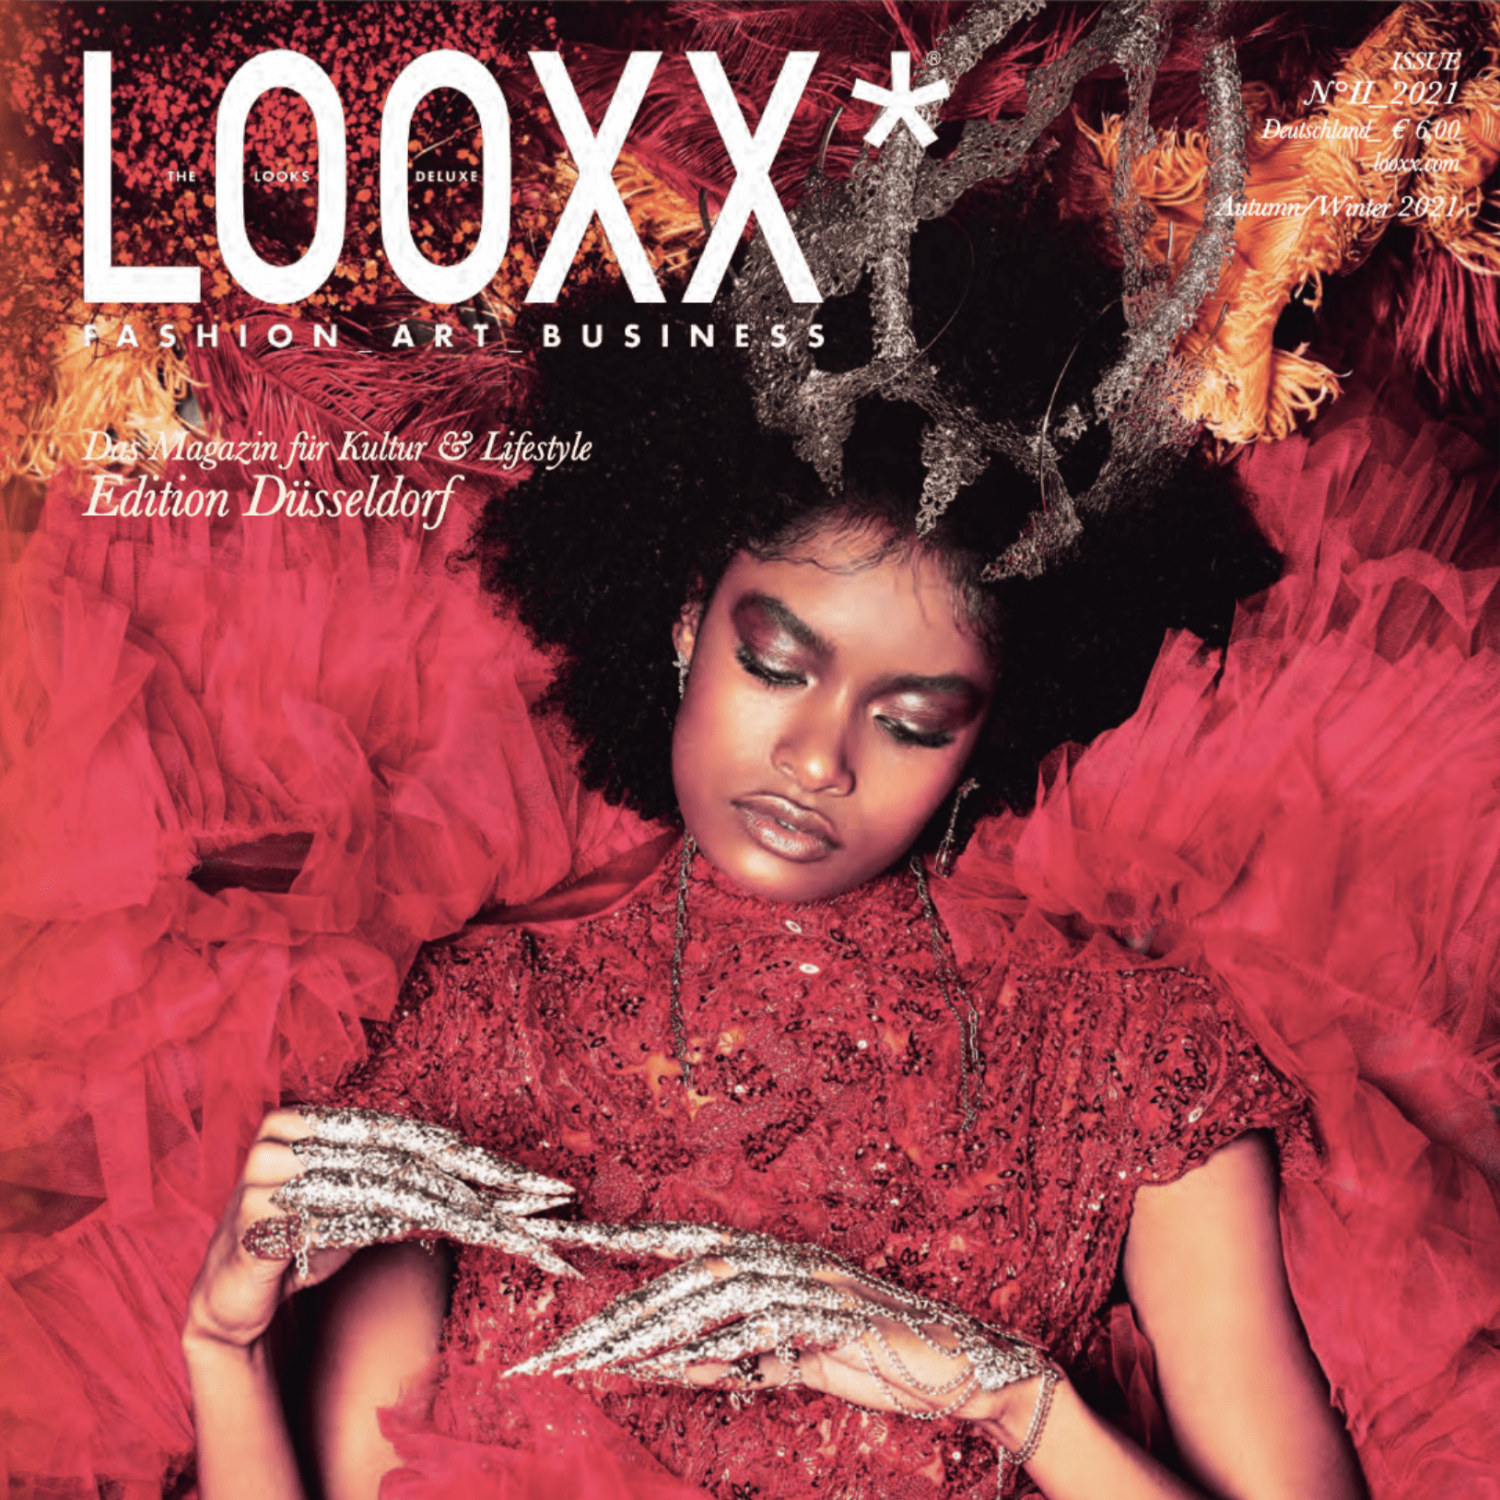 Looxx-fashion-art-business-no11-2021-autumn:winter-2021-best-of-duesseldorf